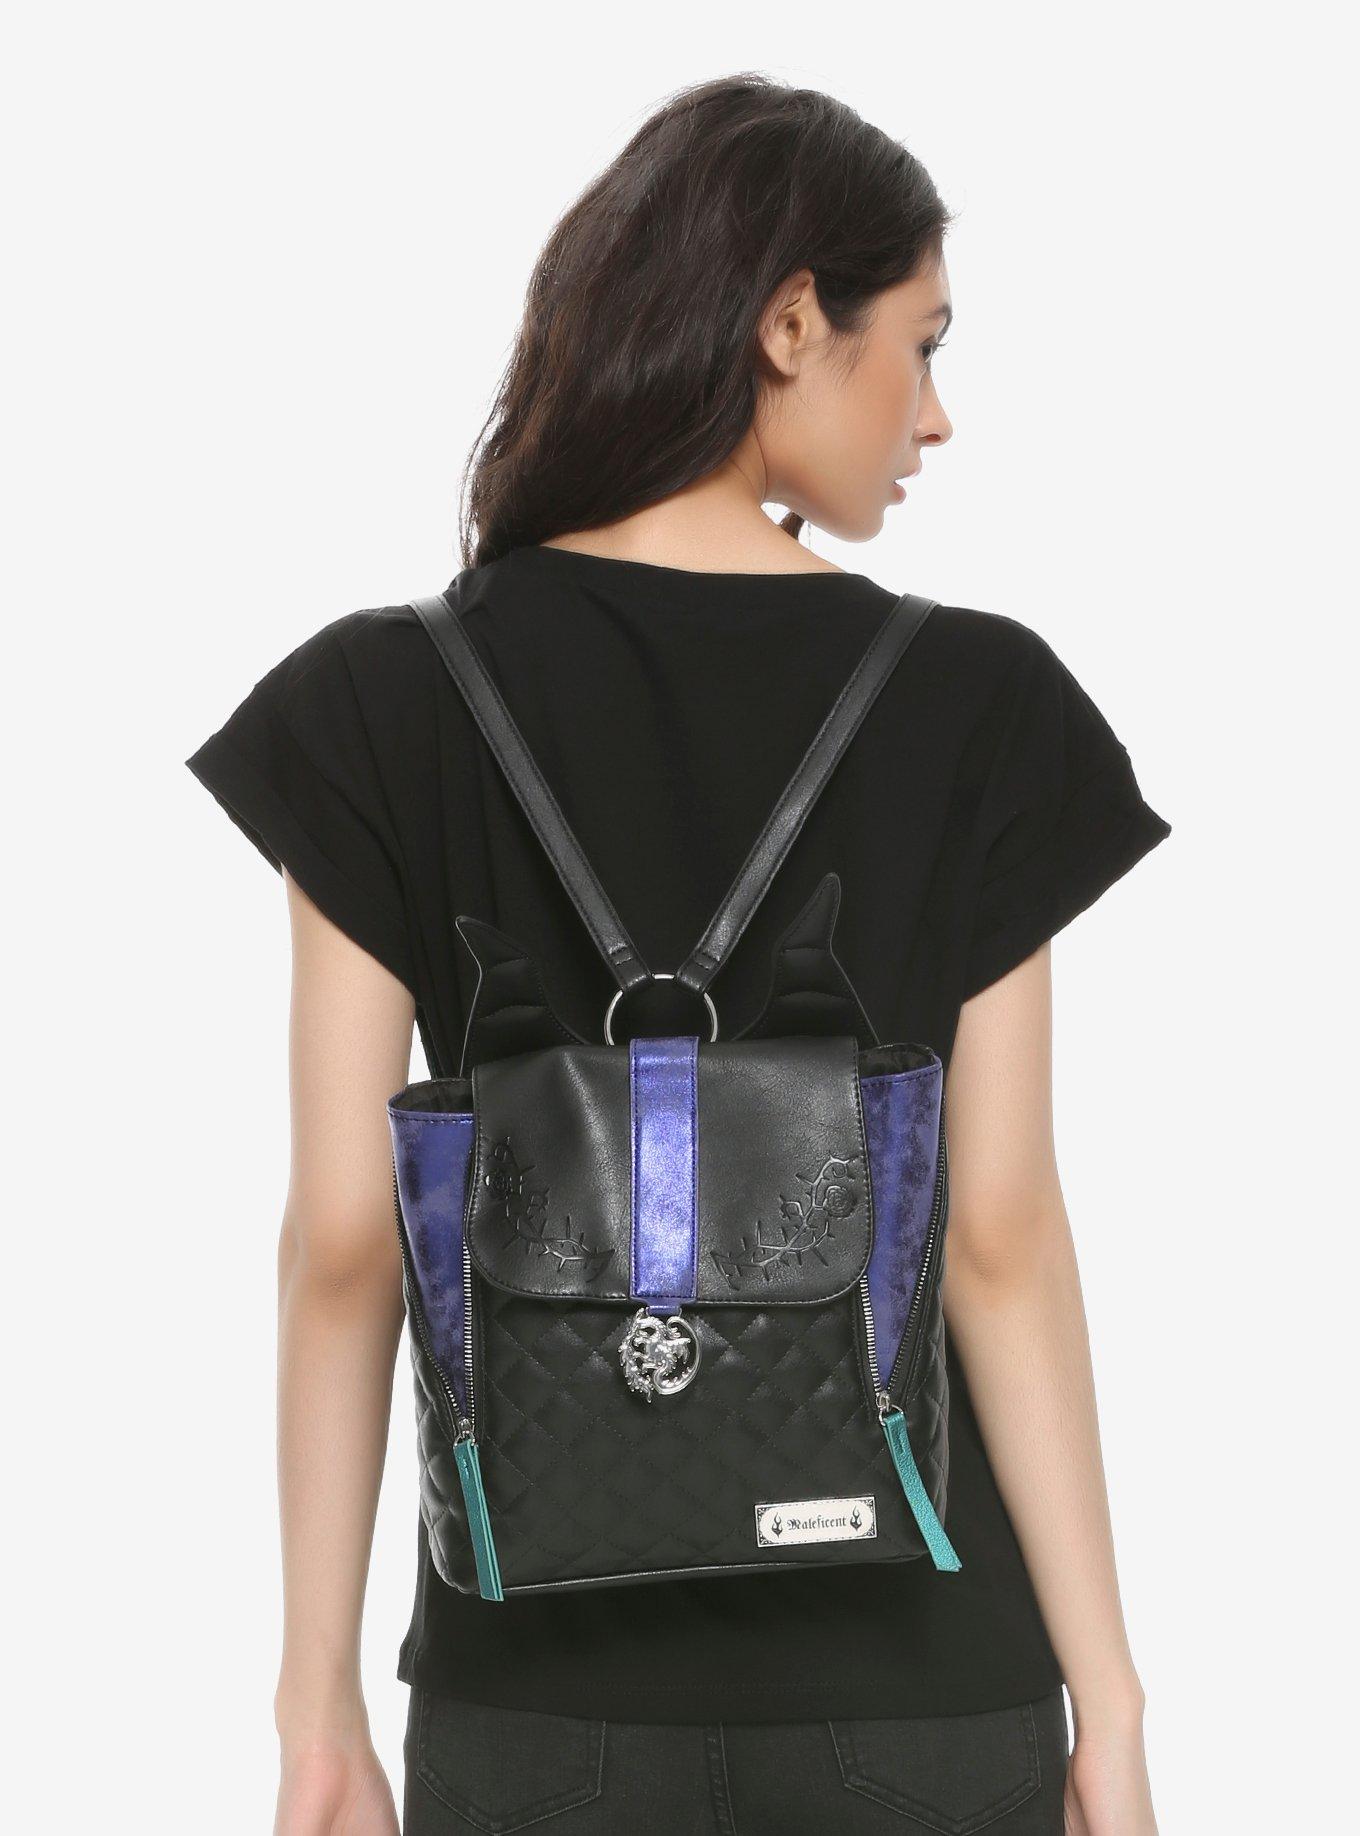 Disney Villains Maleficent Mini Backpack, , hi-res